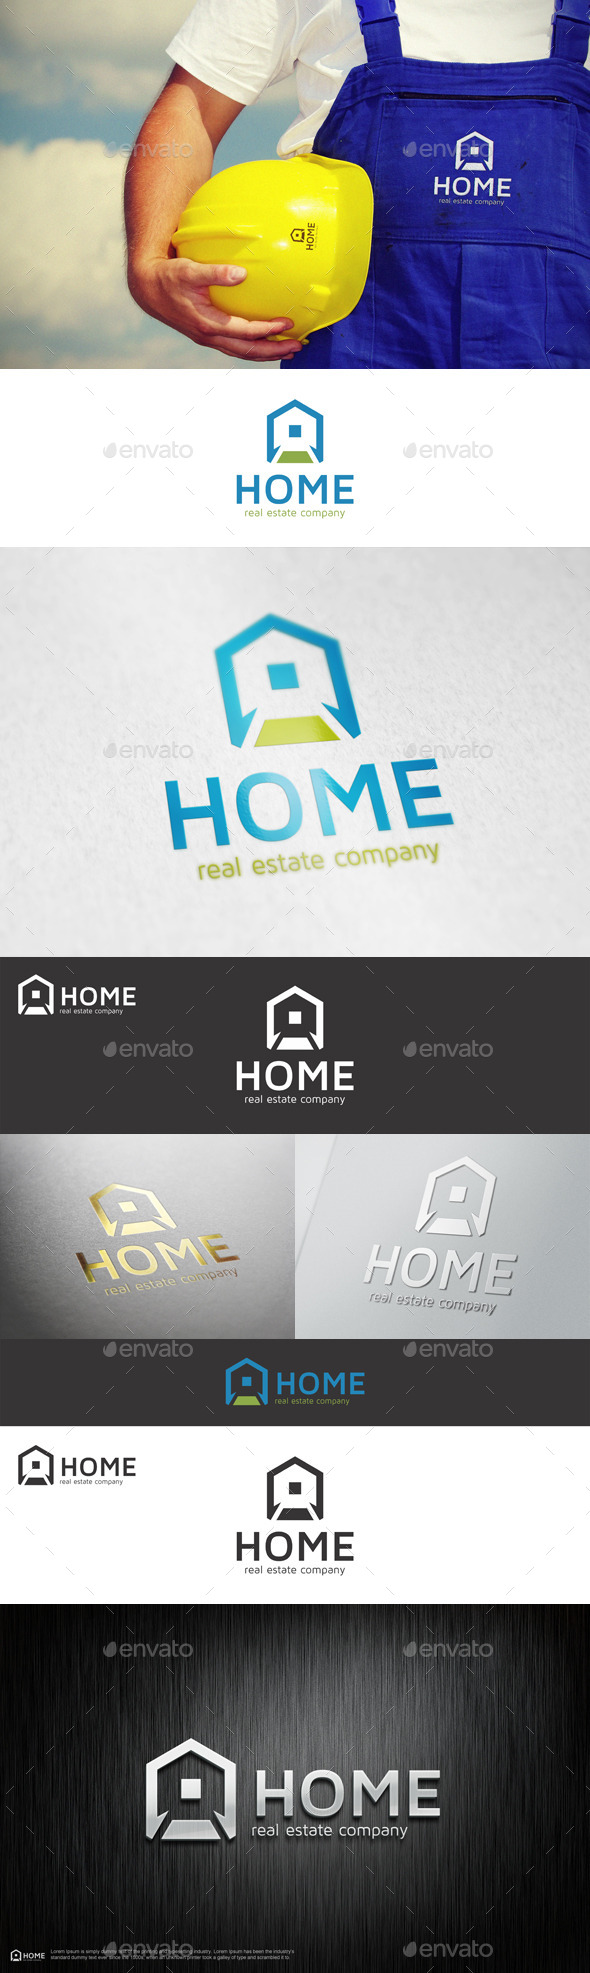 Home Real Estate Company Logo